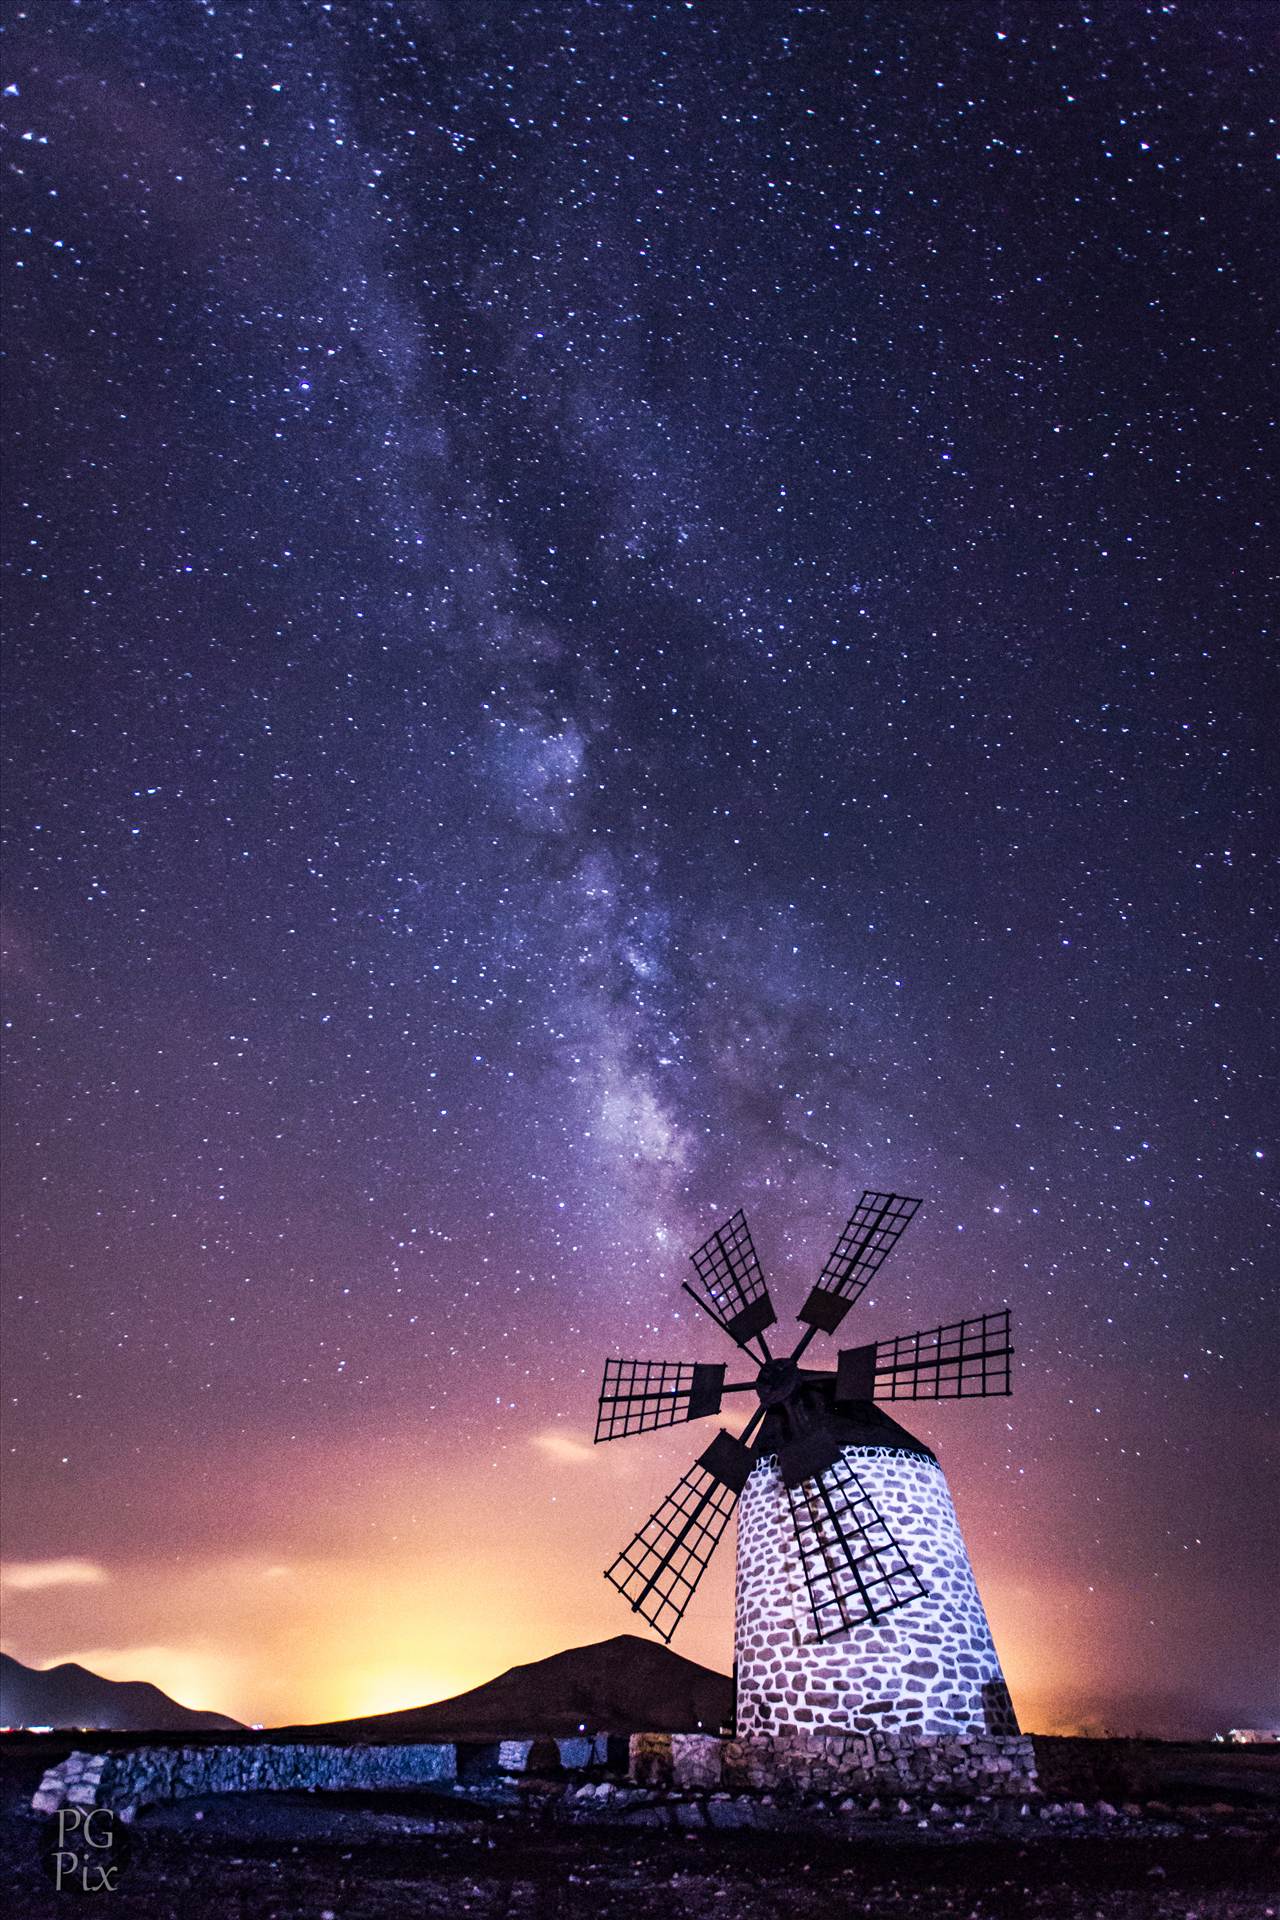 Windmill & Milky Way 1.jpg  by WPC-237